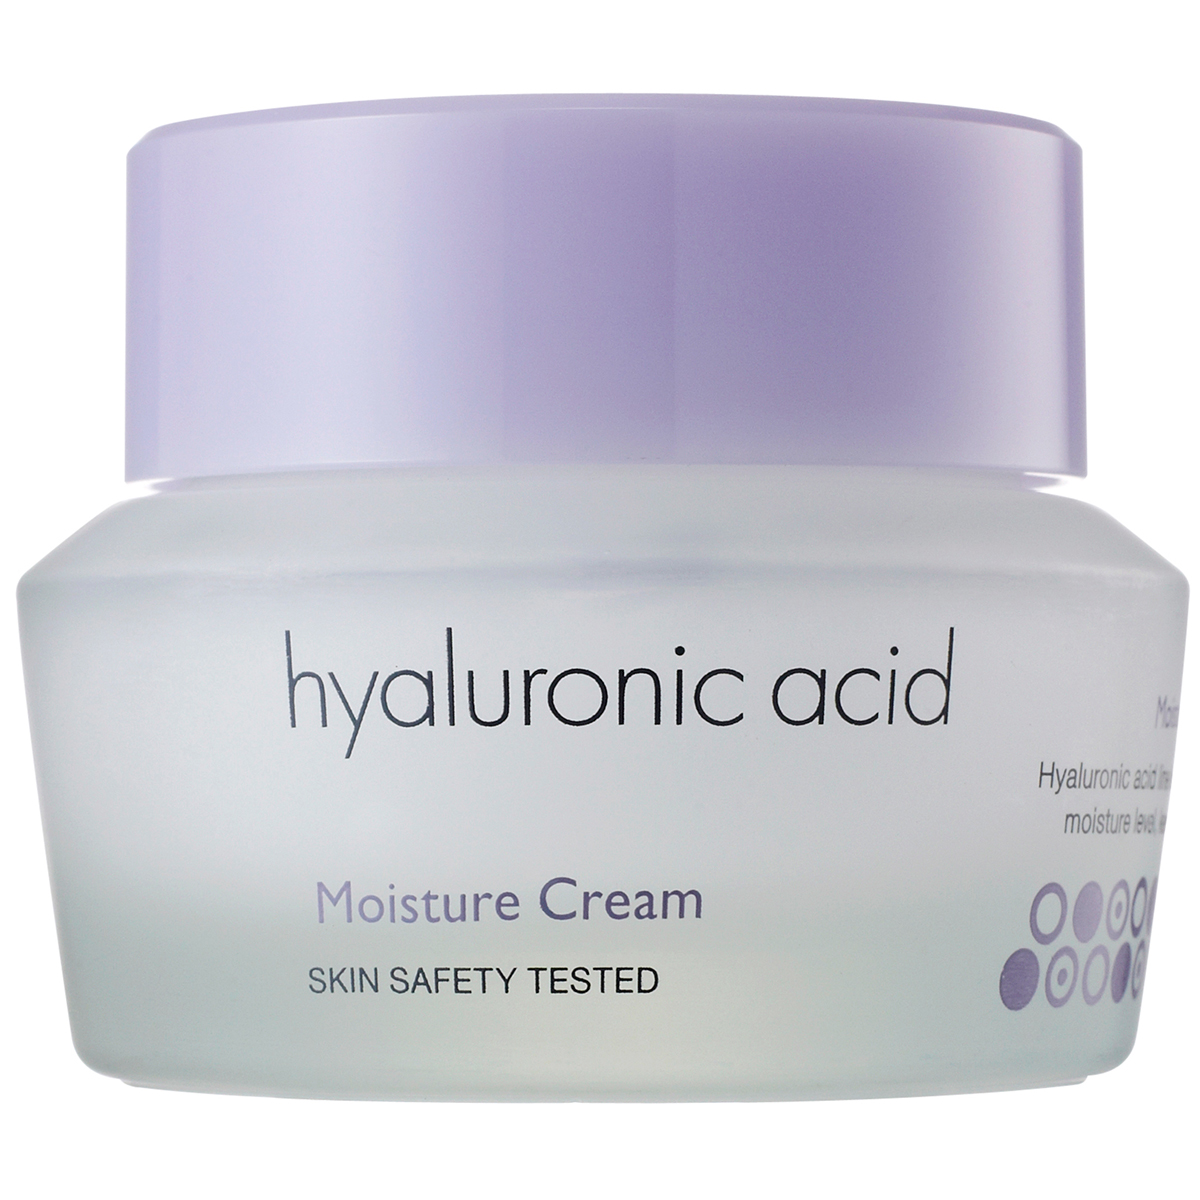 Hyaluronic Acid Moisture Cream, 50 ml It